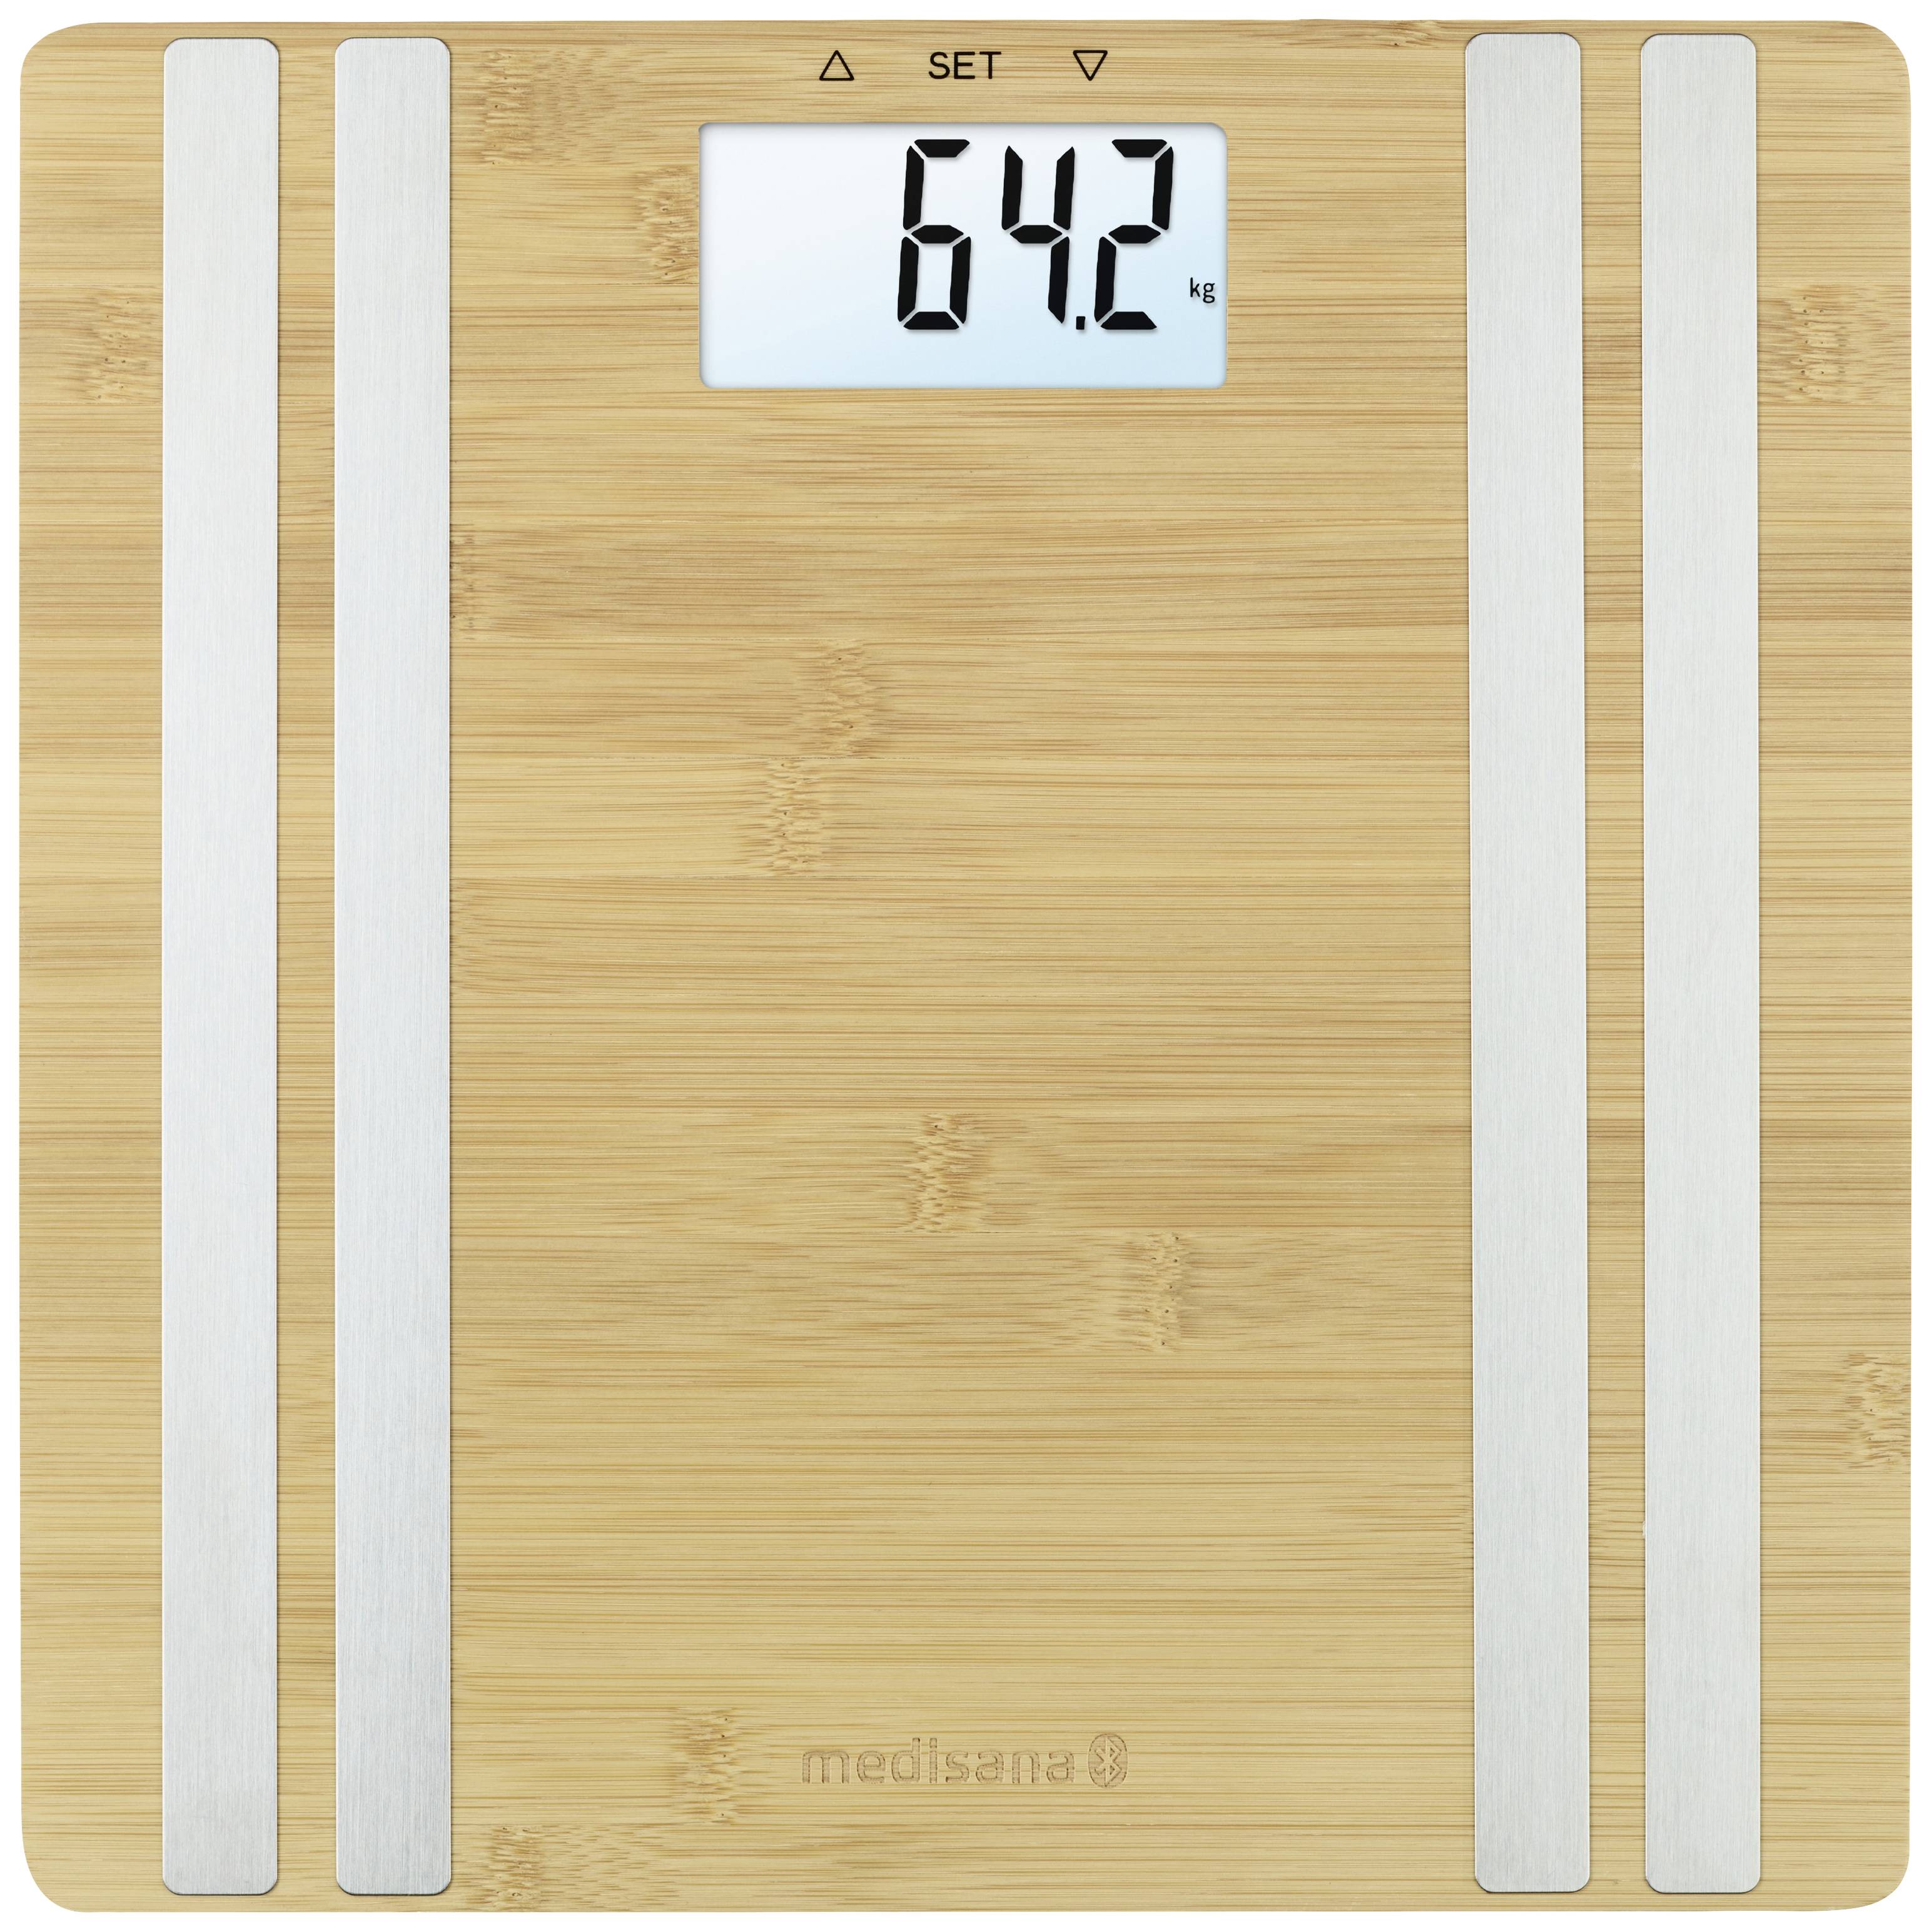 Grundig Premium PS 4110 Digital Personal Scales Bamboo Wood 